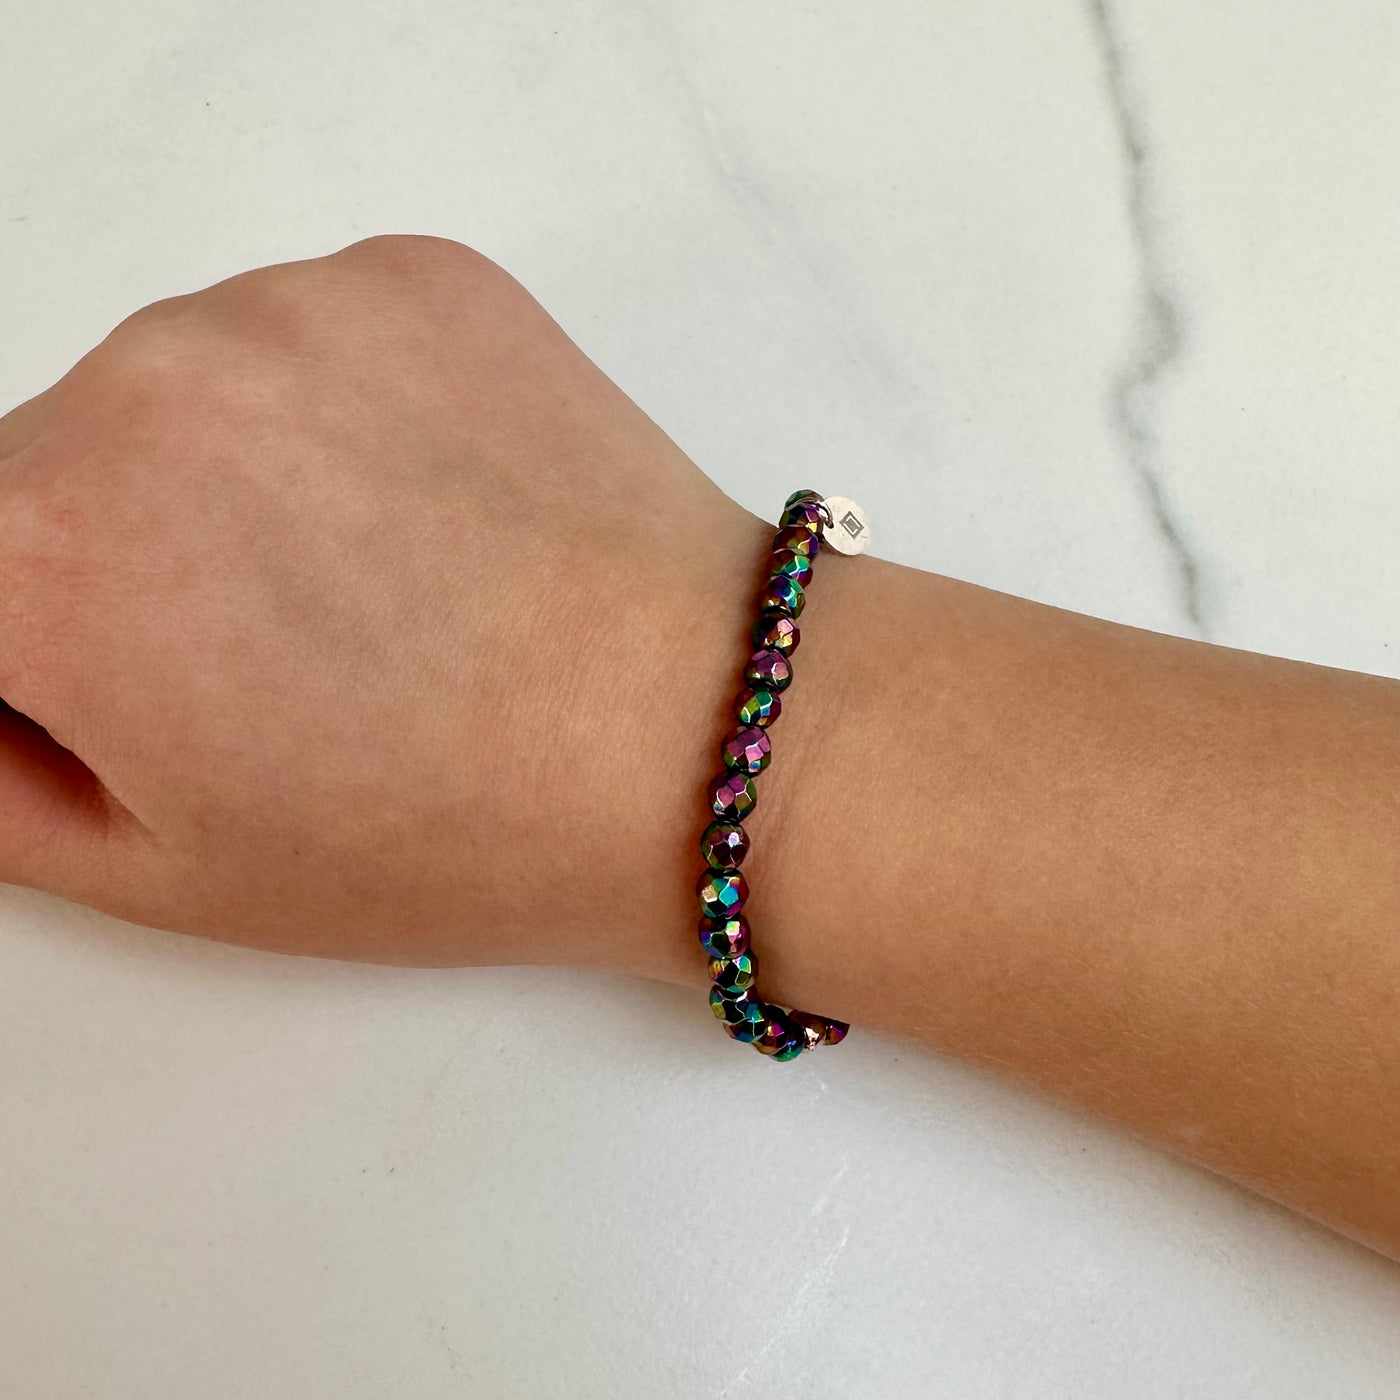 children's rainbow coloured hematite natural gemstone bracelet 4mm beads